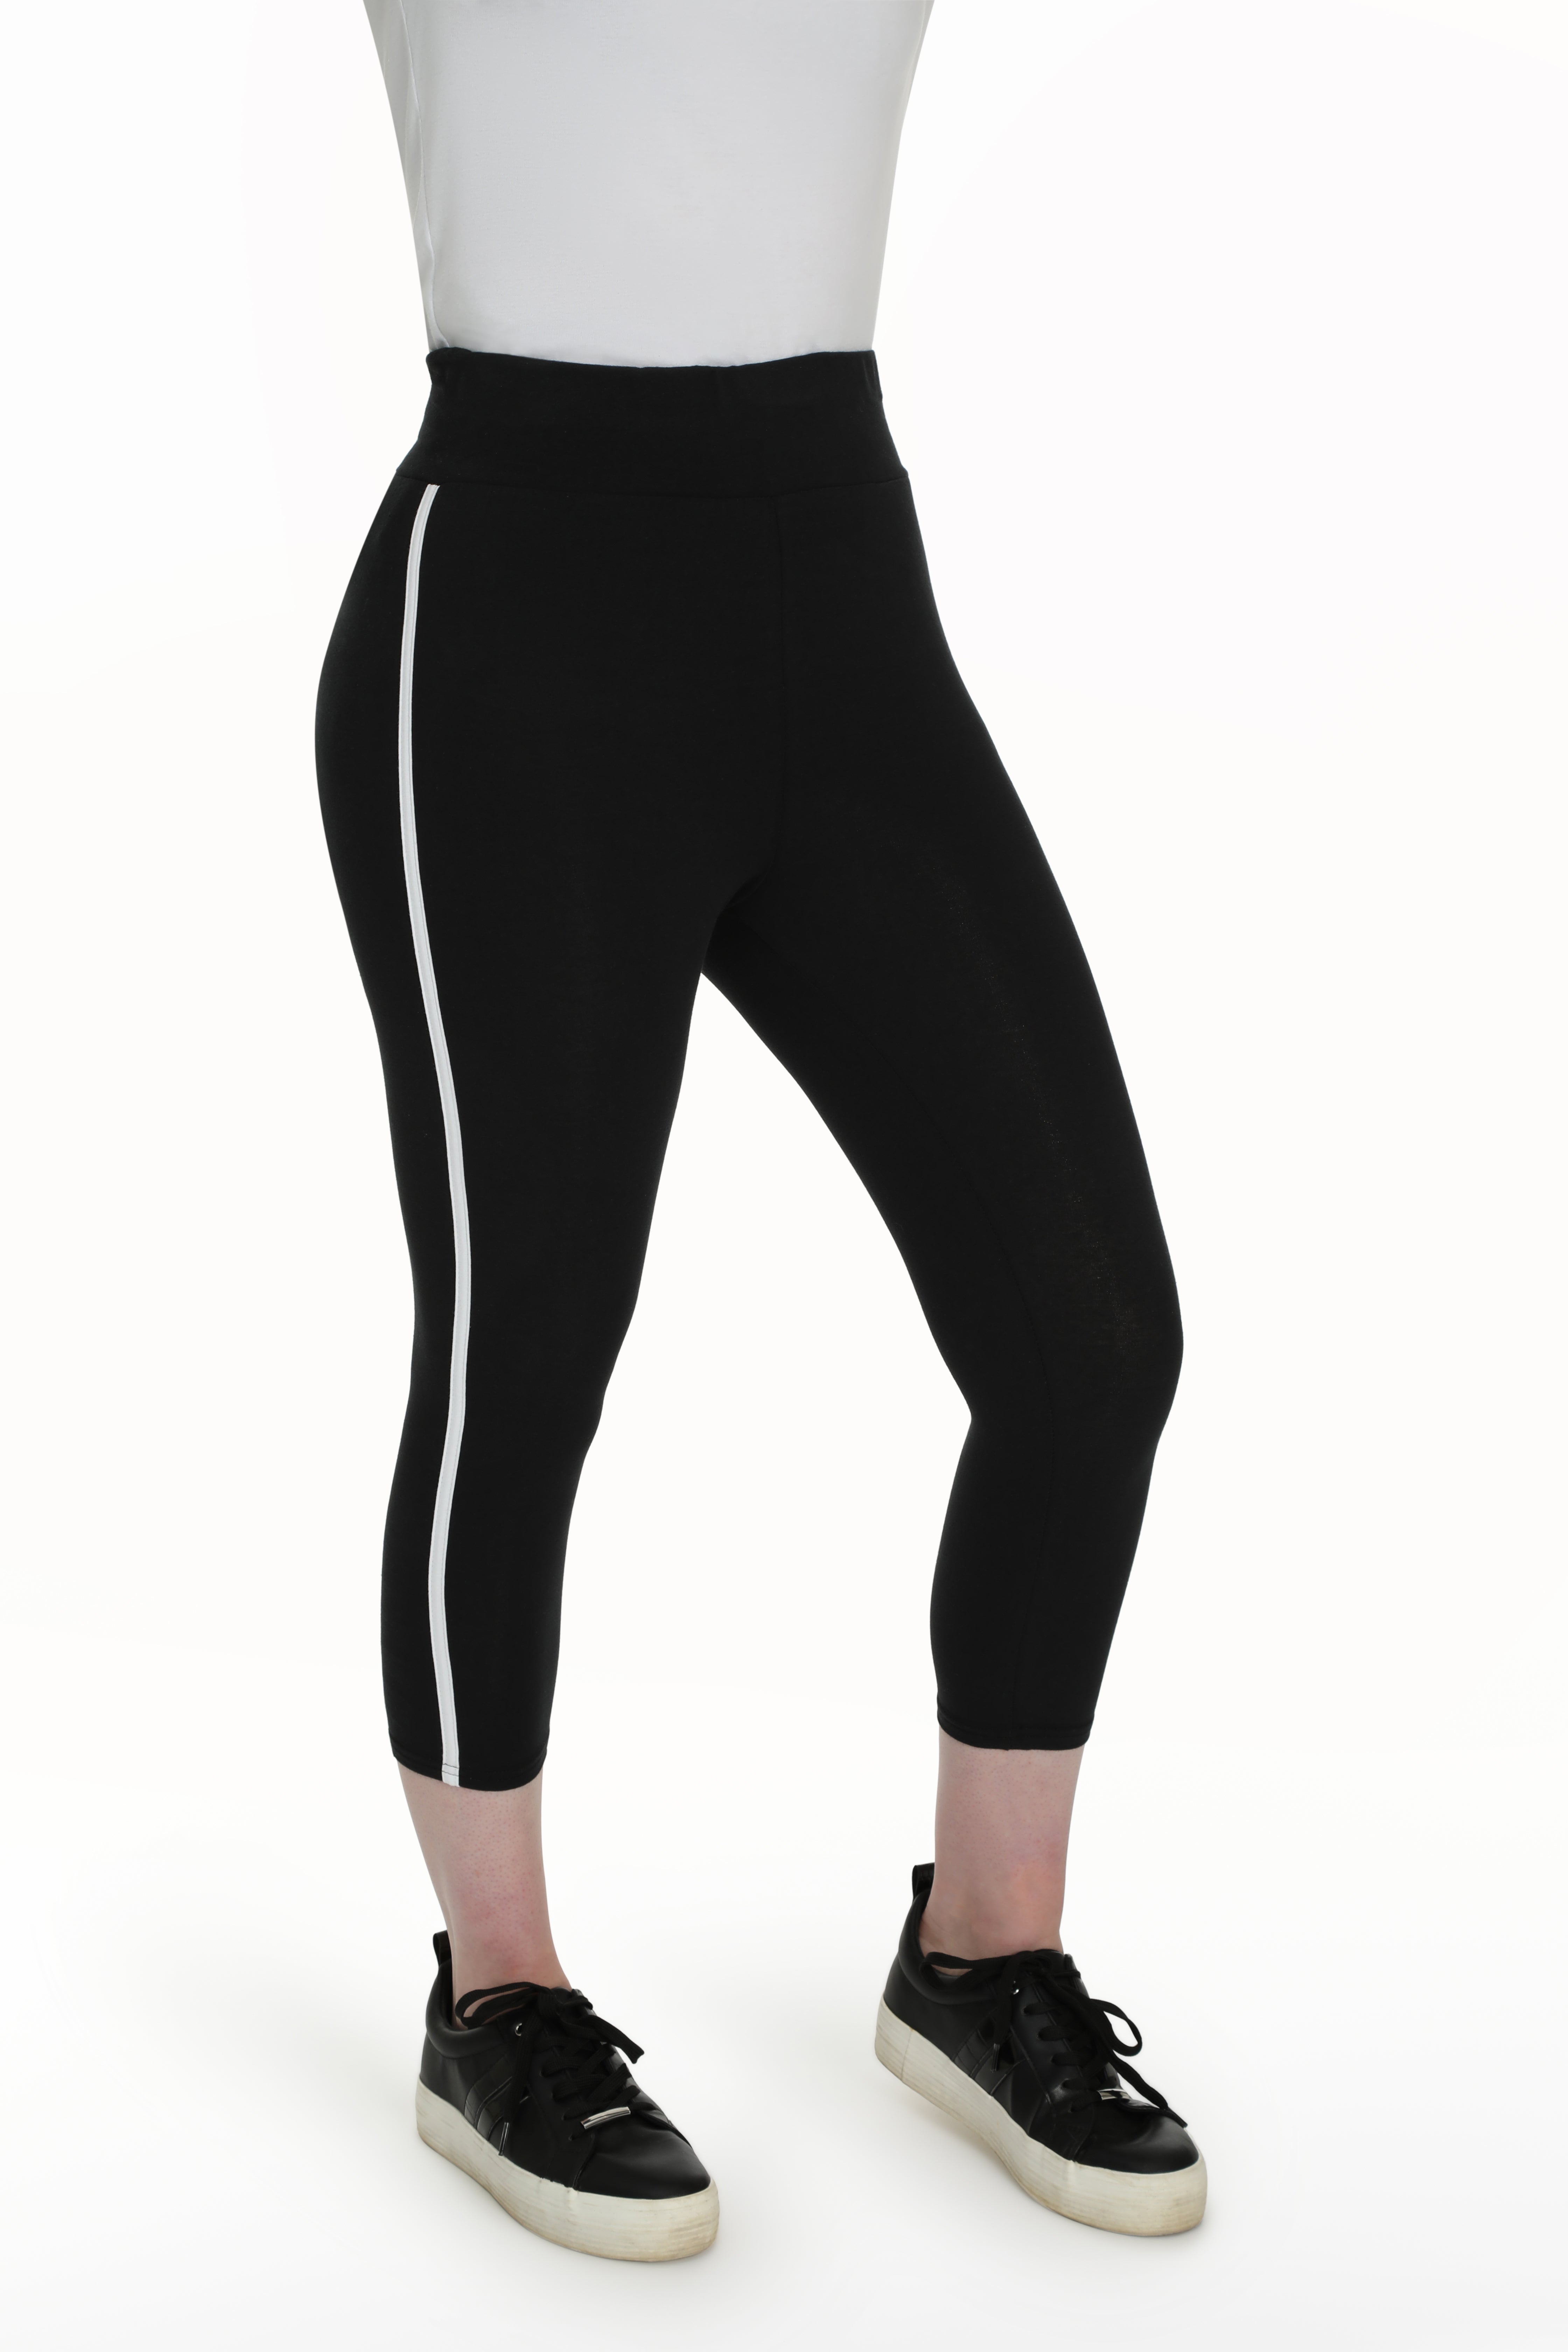 Tani Clothing Mid Calf Modal Leggings Black | Tani Australia-cheohanoi.vn